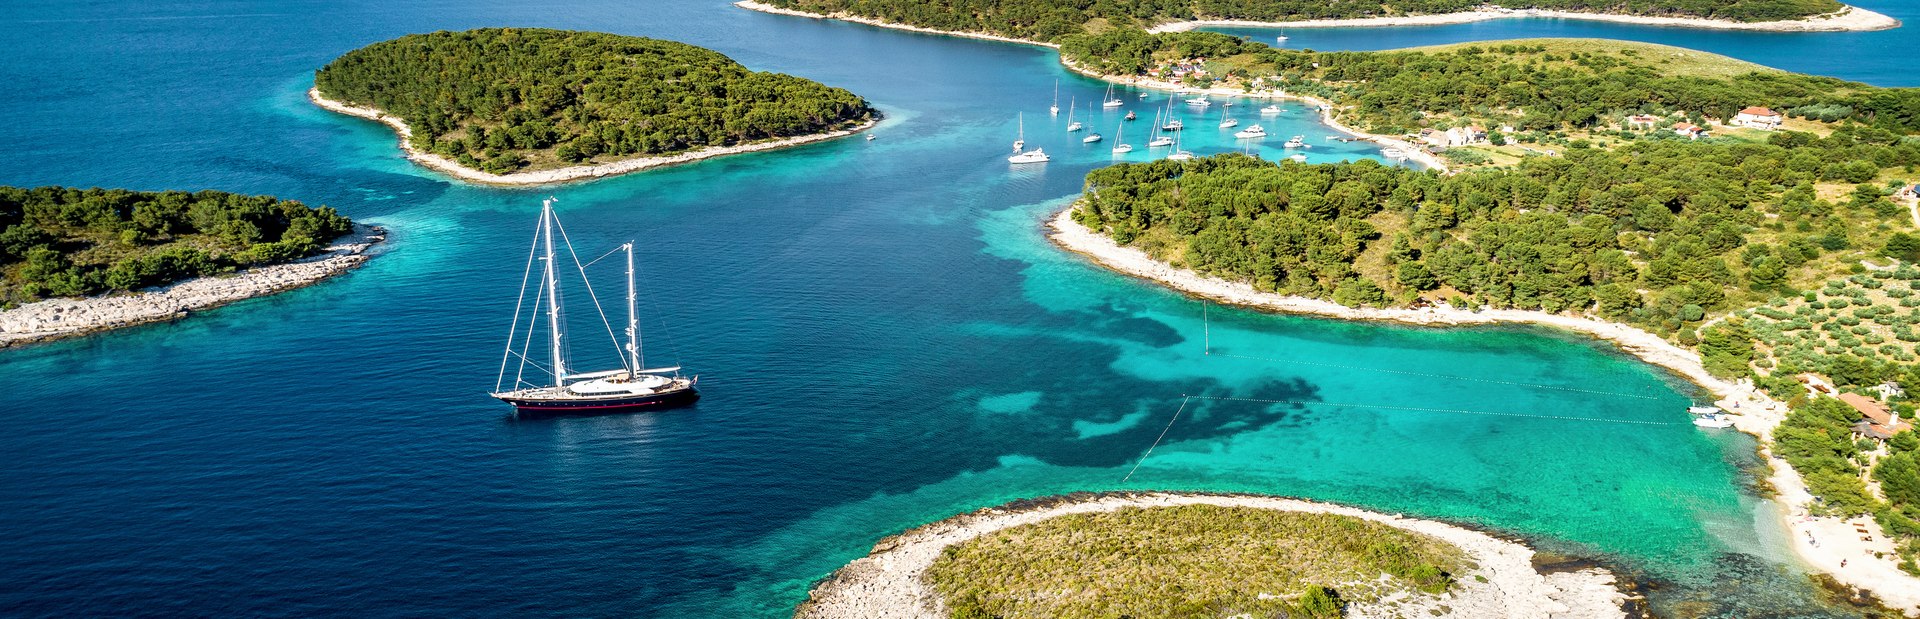 Saling yacht anchored in Croatia's Dalmation islands